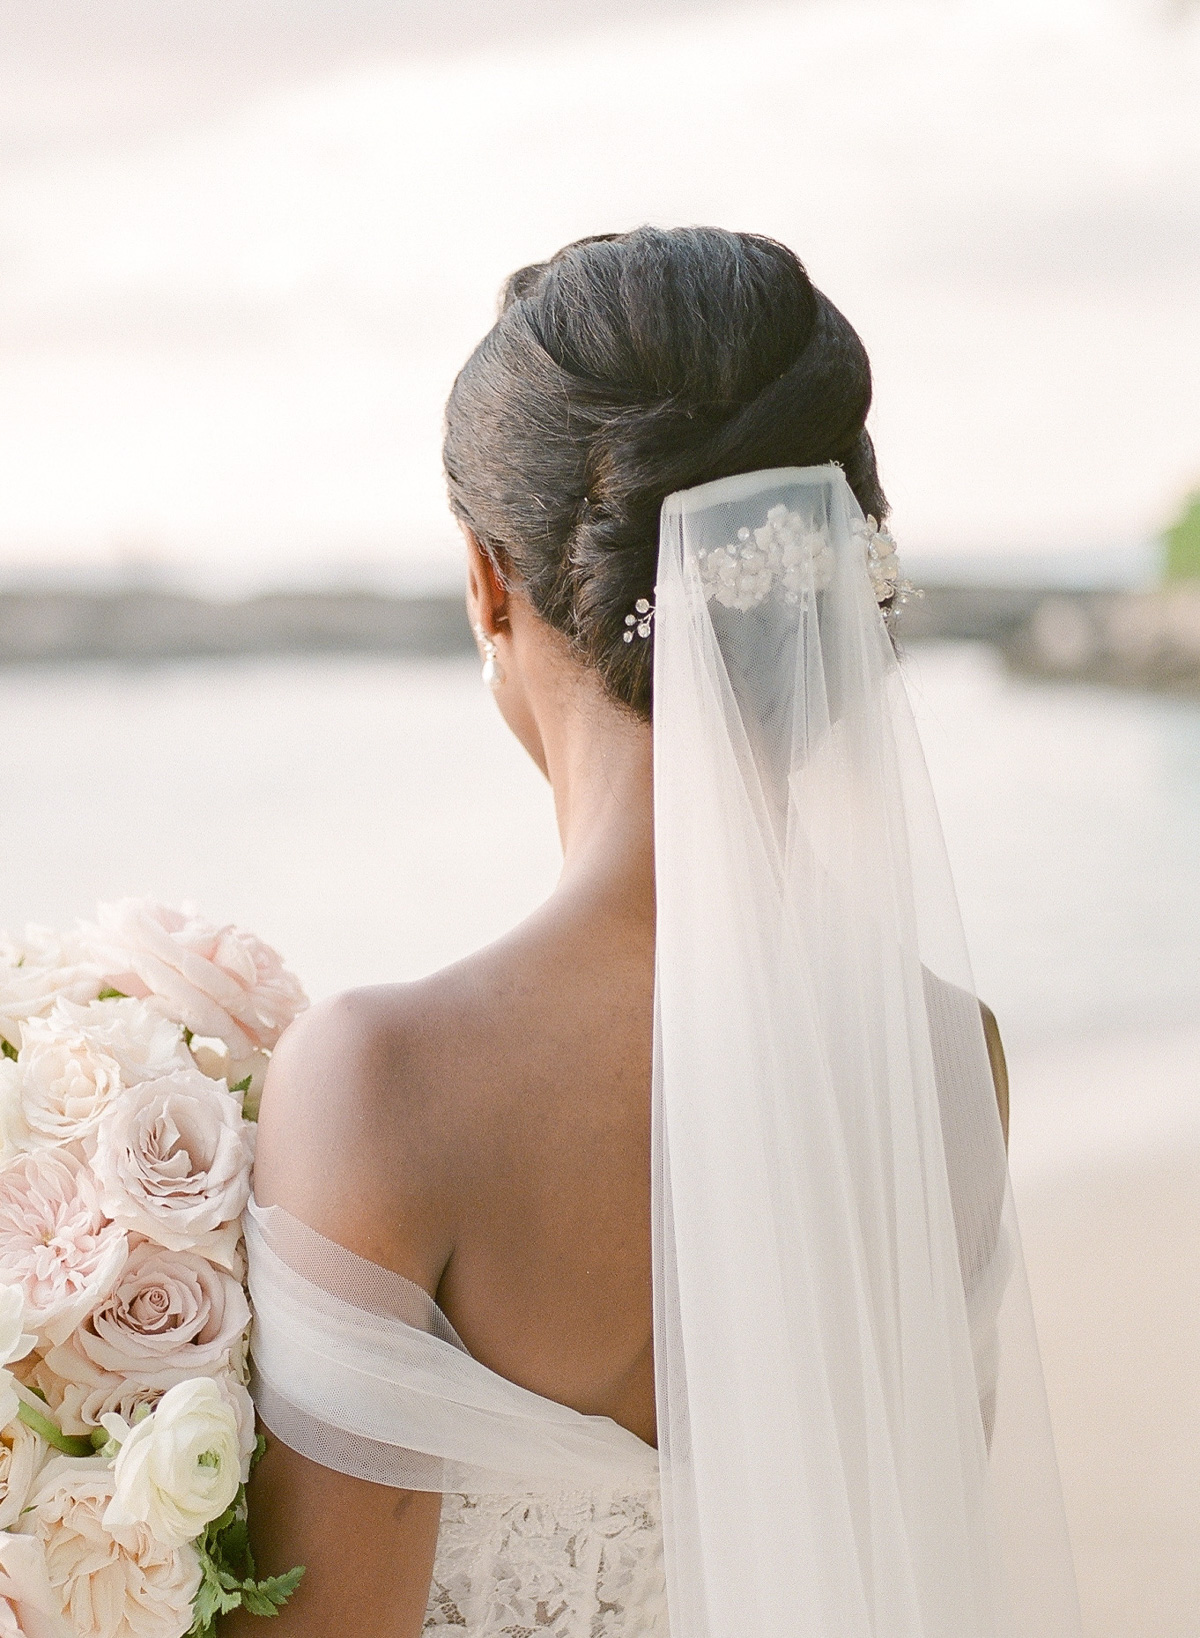 lack hair wedding updos with veil